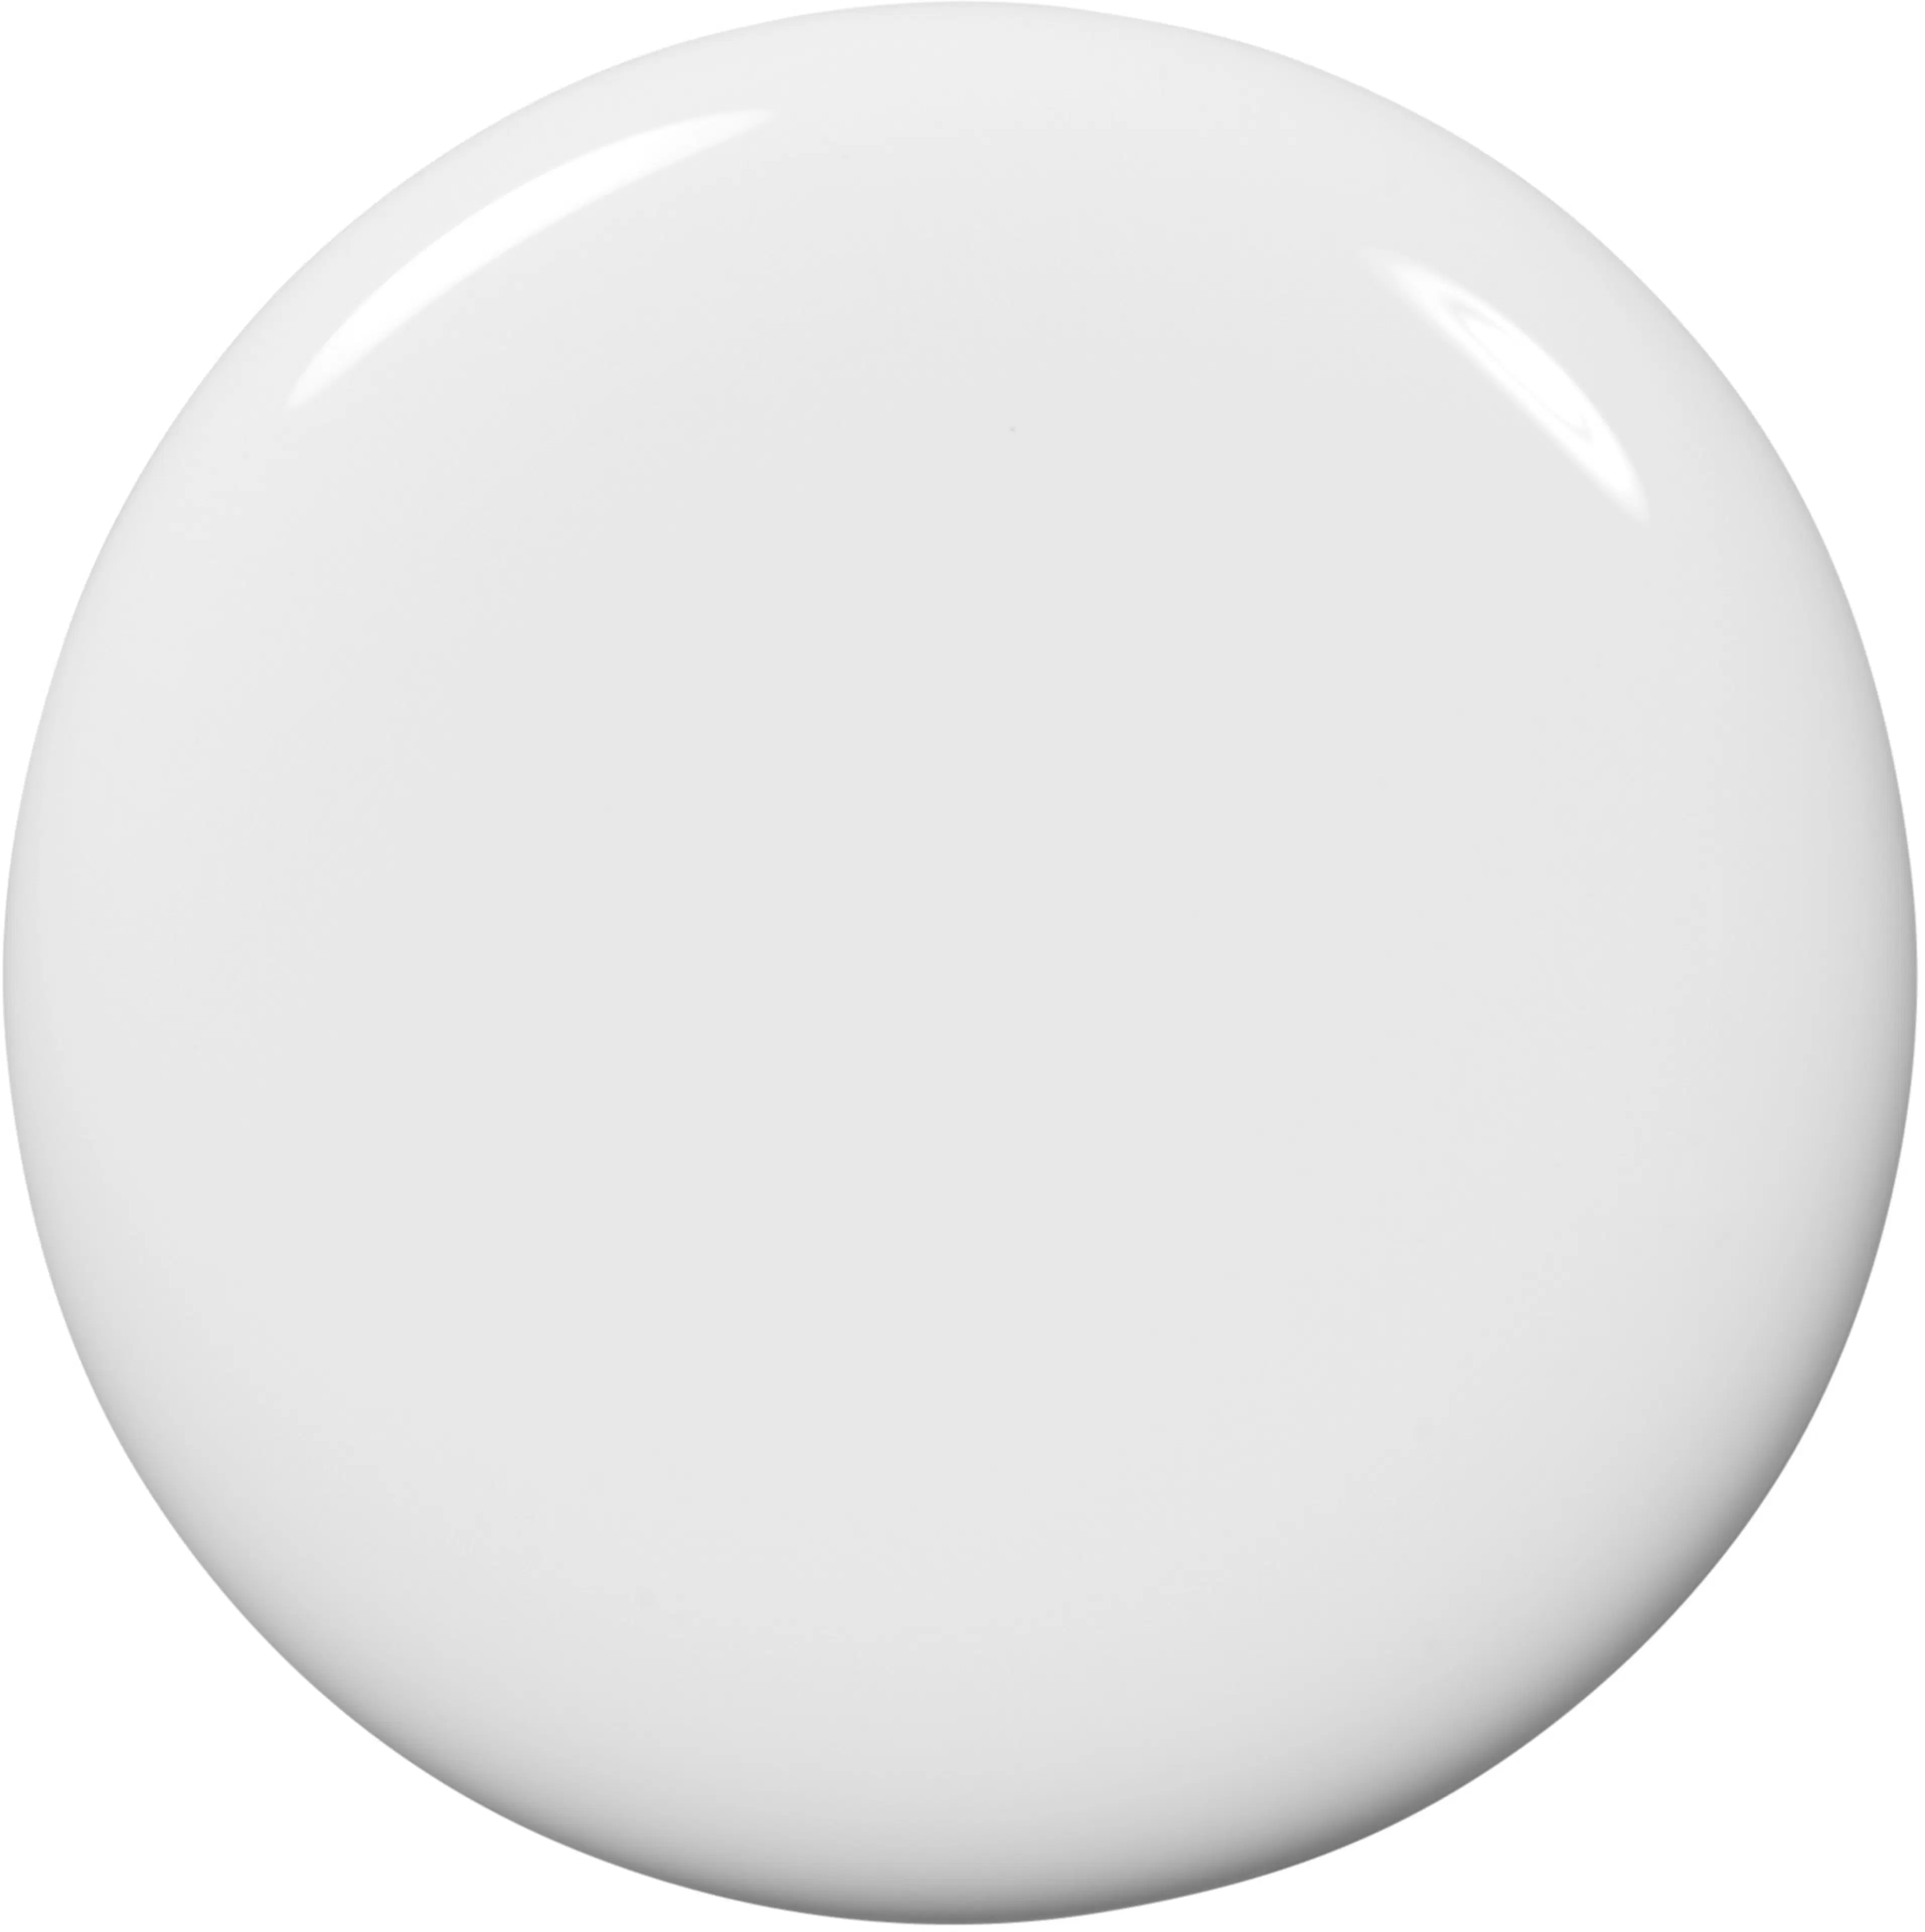 essie 1 Blanc -kynsilakka 13,5ml